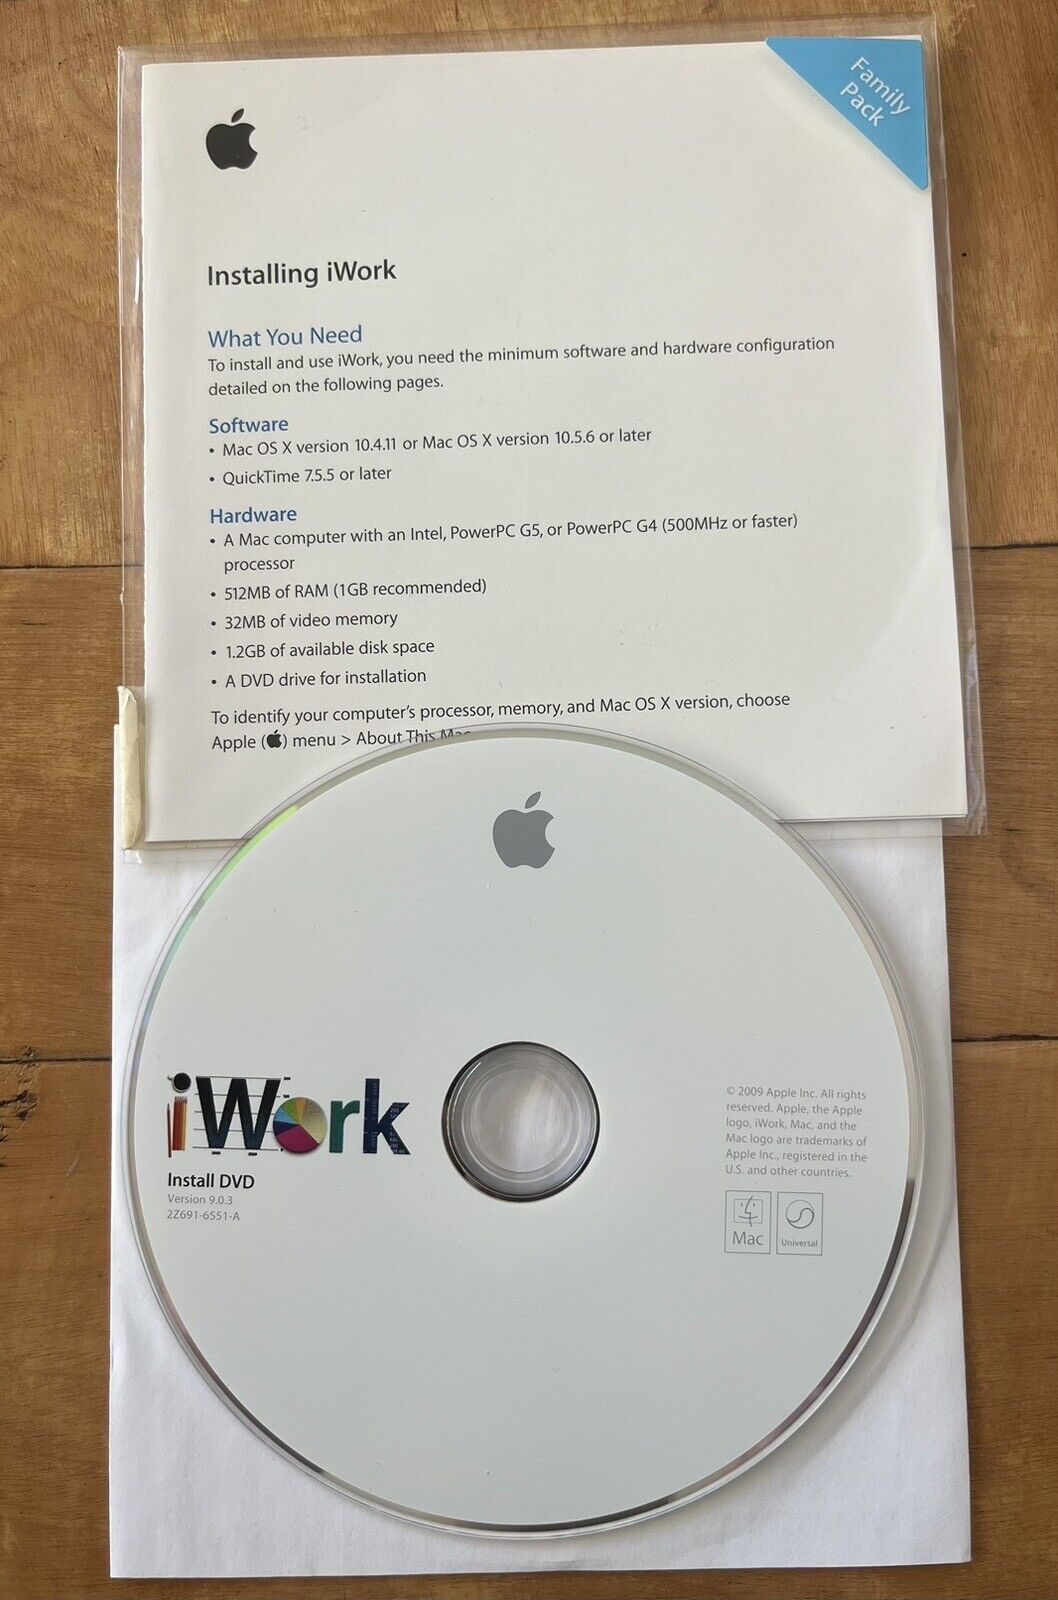 Apple i work install dvd 2009 version 9.0.3 2z691-6551-a